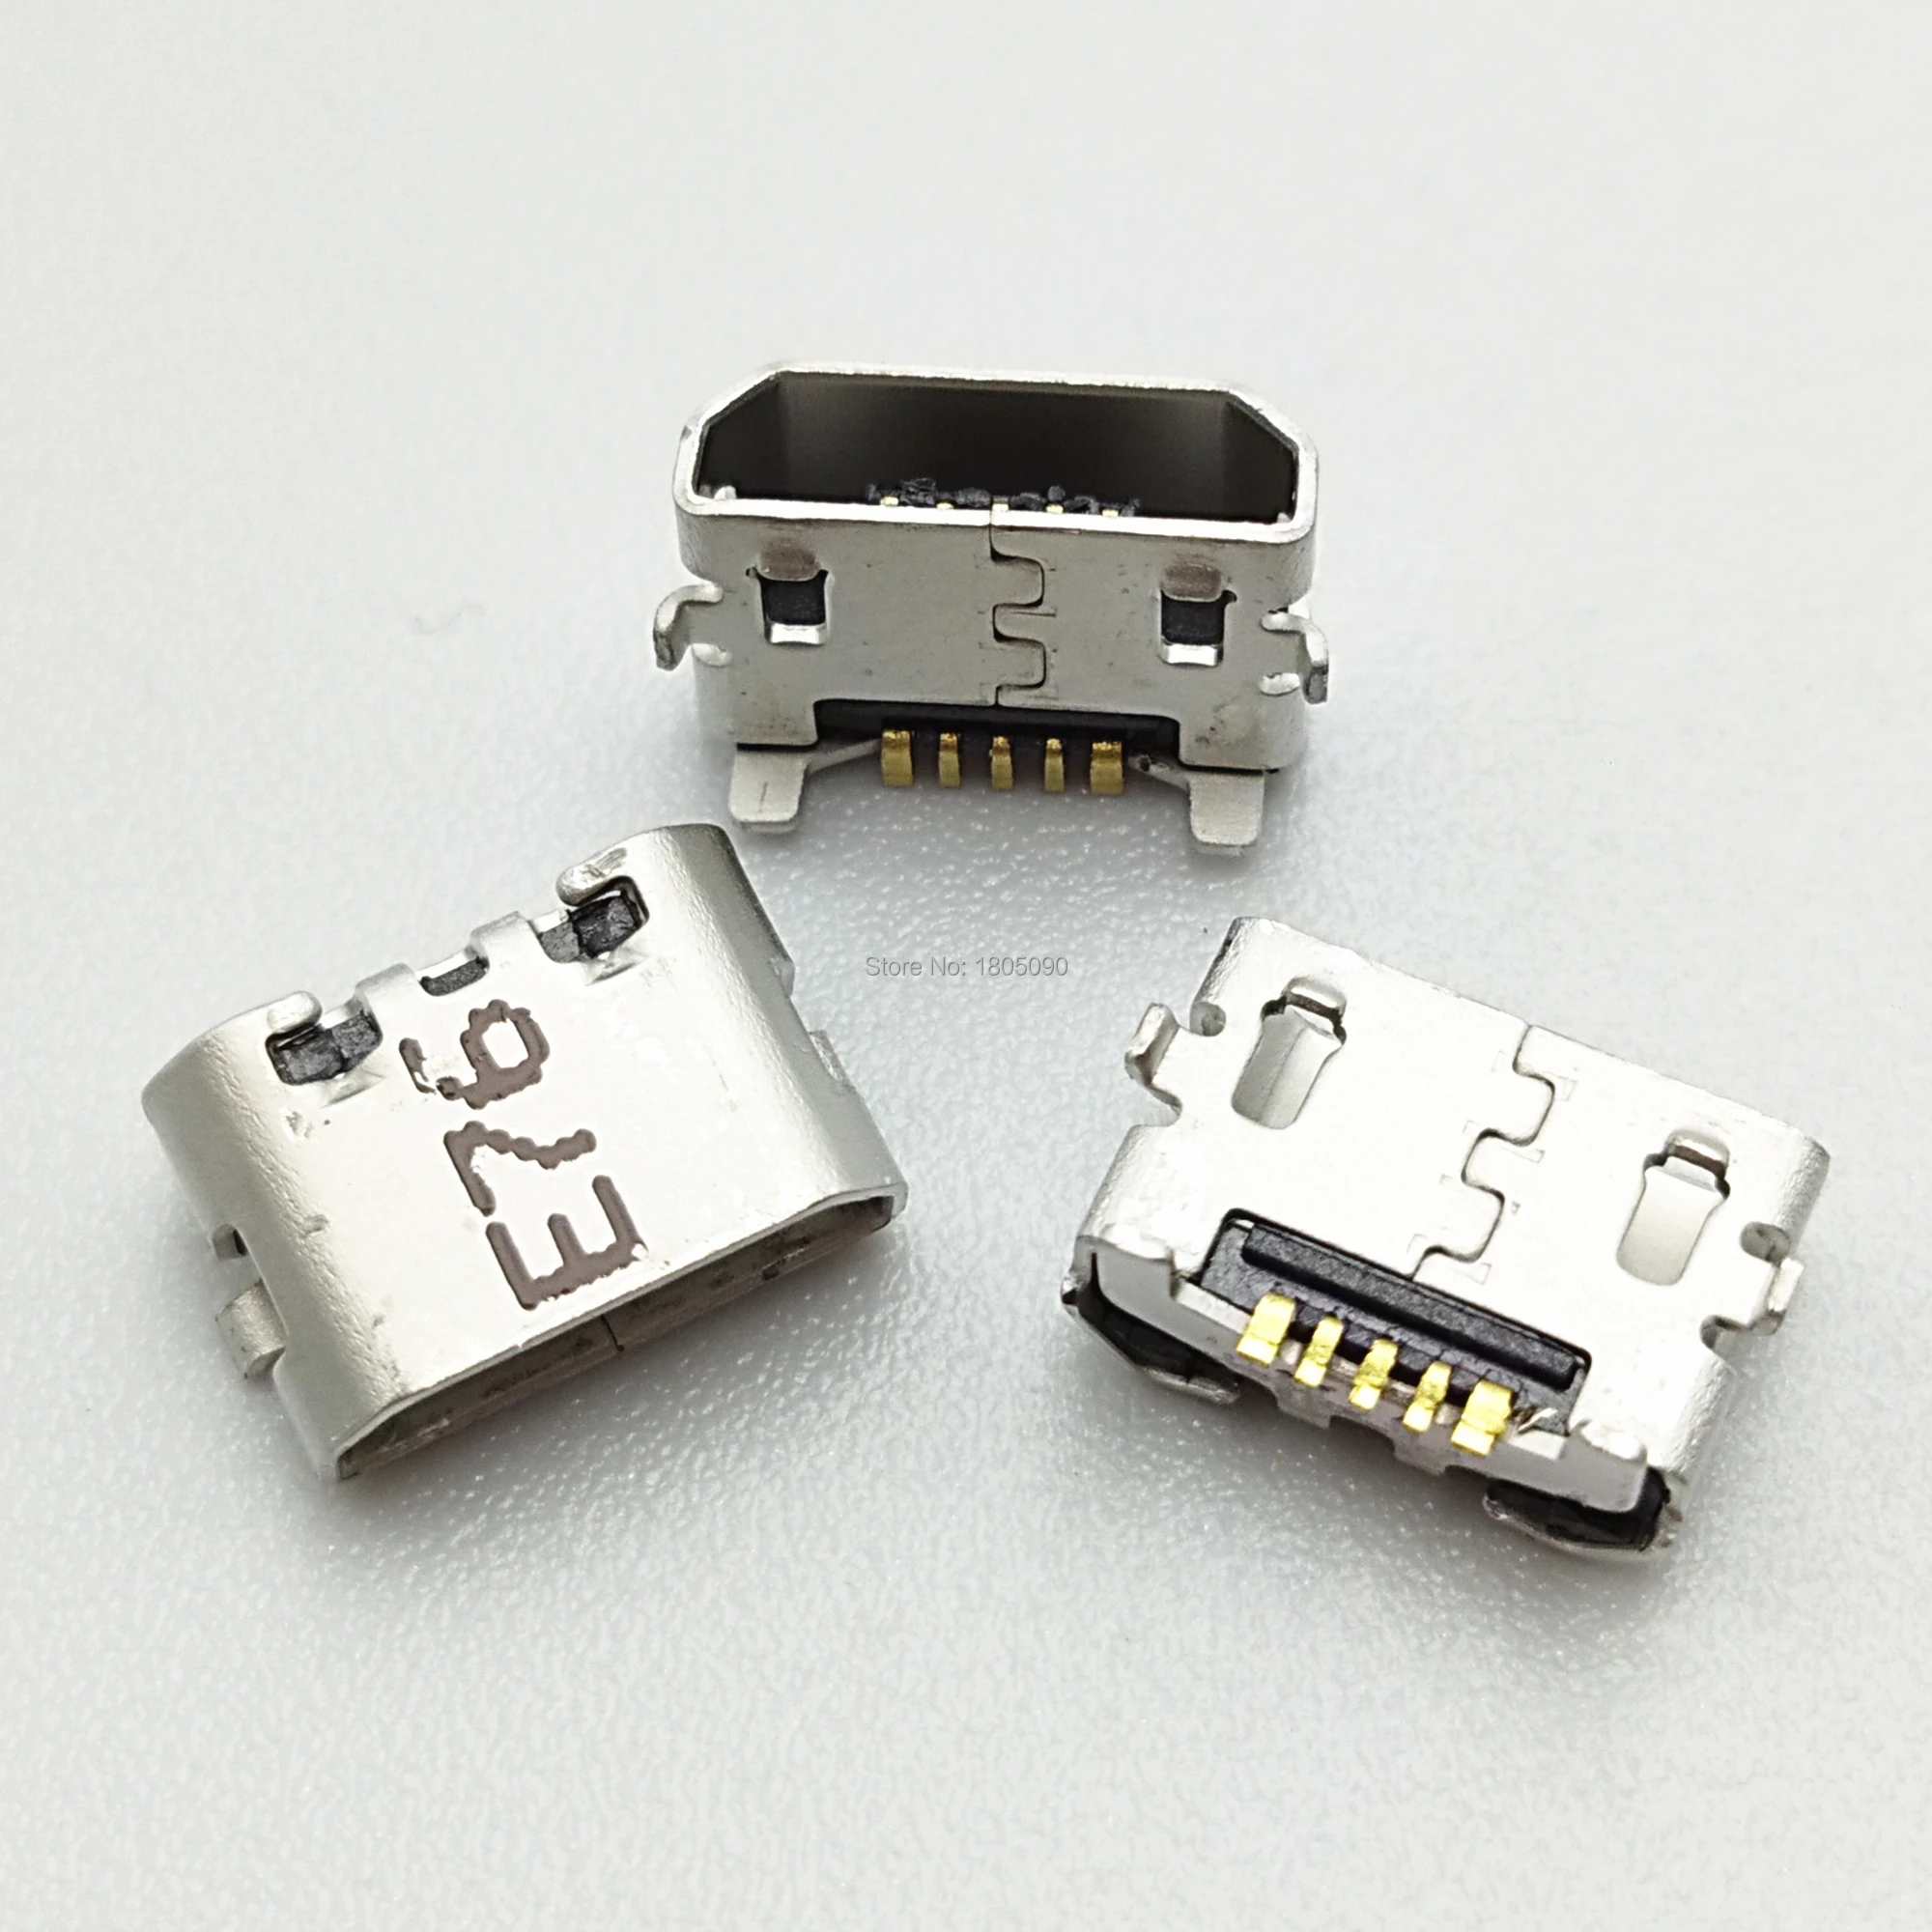 

10pcs Micro USB Charging Port Dock Connector Socket For Huawei Ascend 4X 4X Y6 4A P8 C8817 P8 max P8 Lite 4C 3X Pro G750-T20